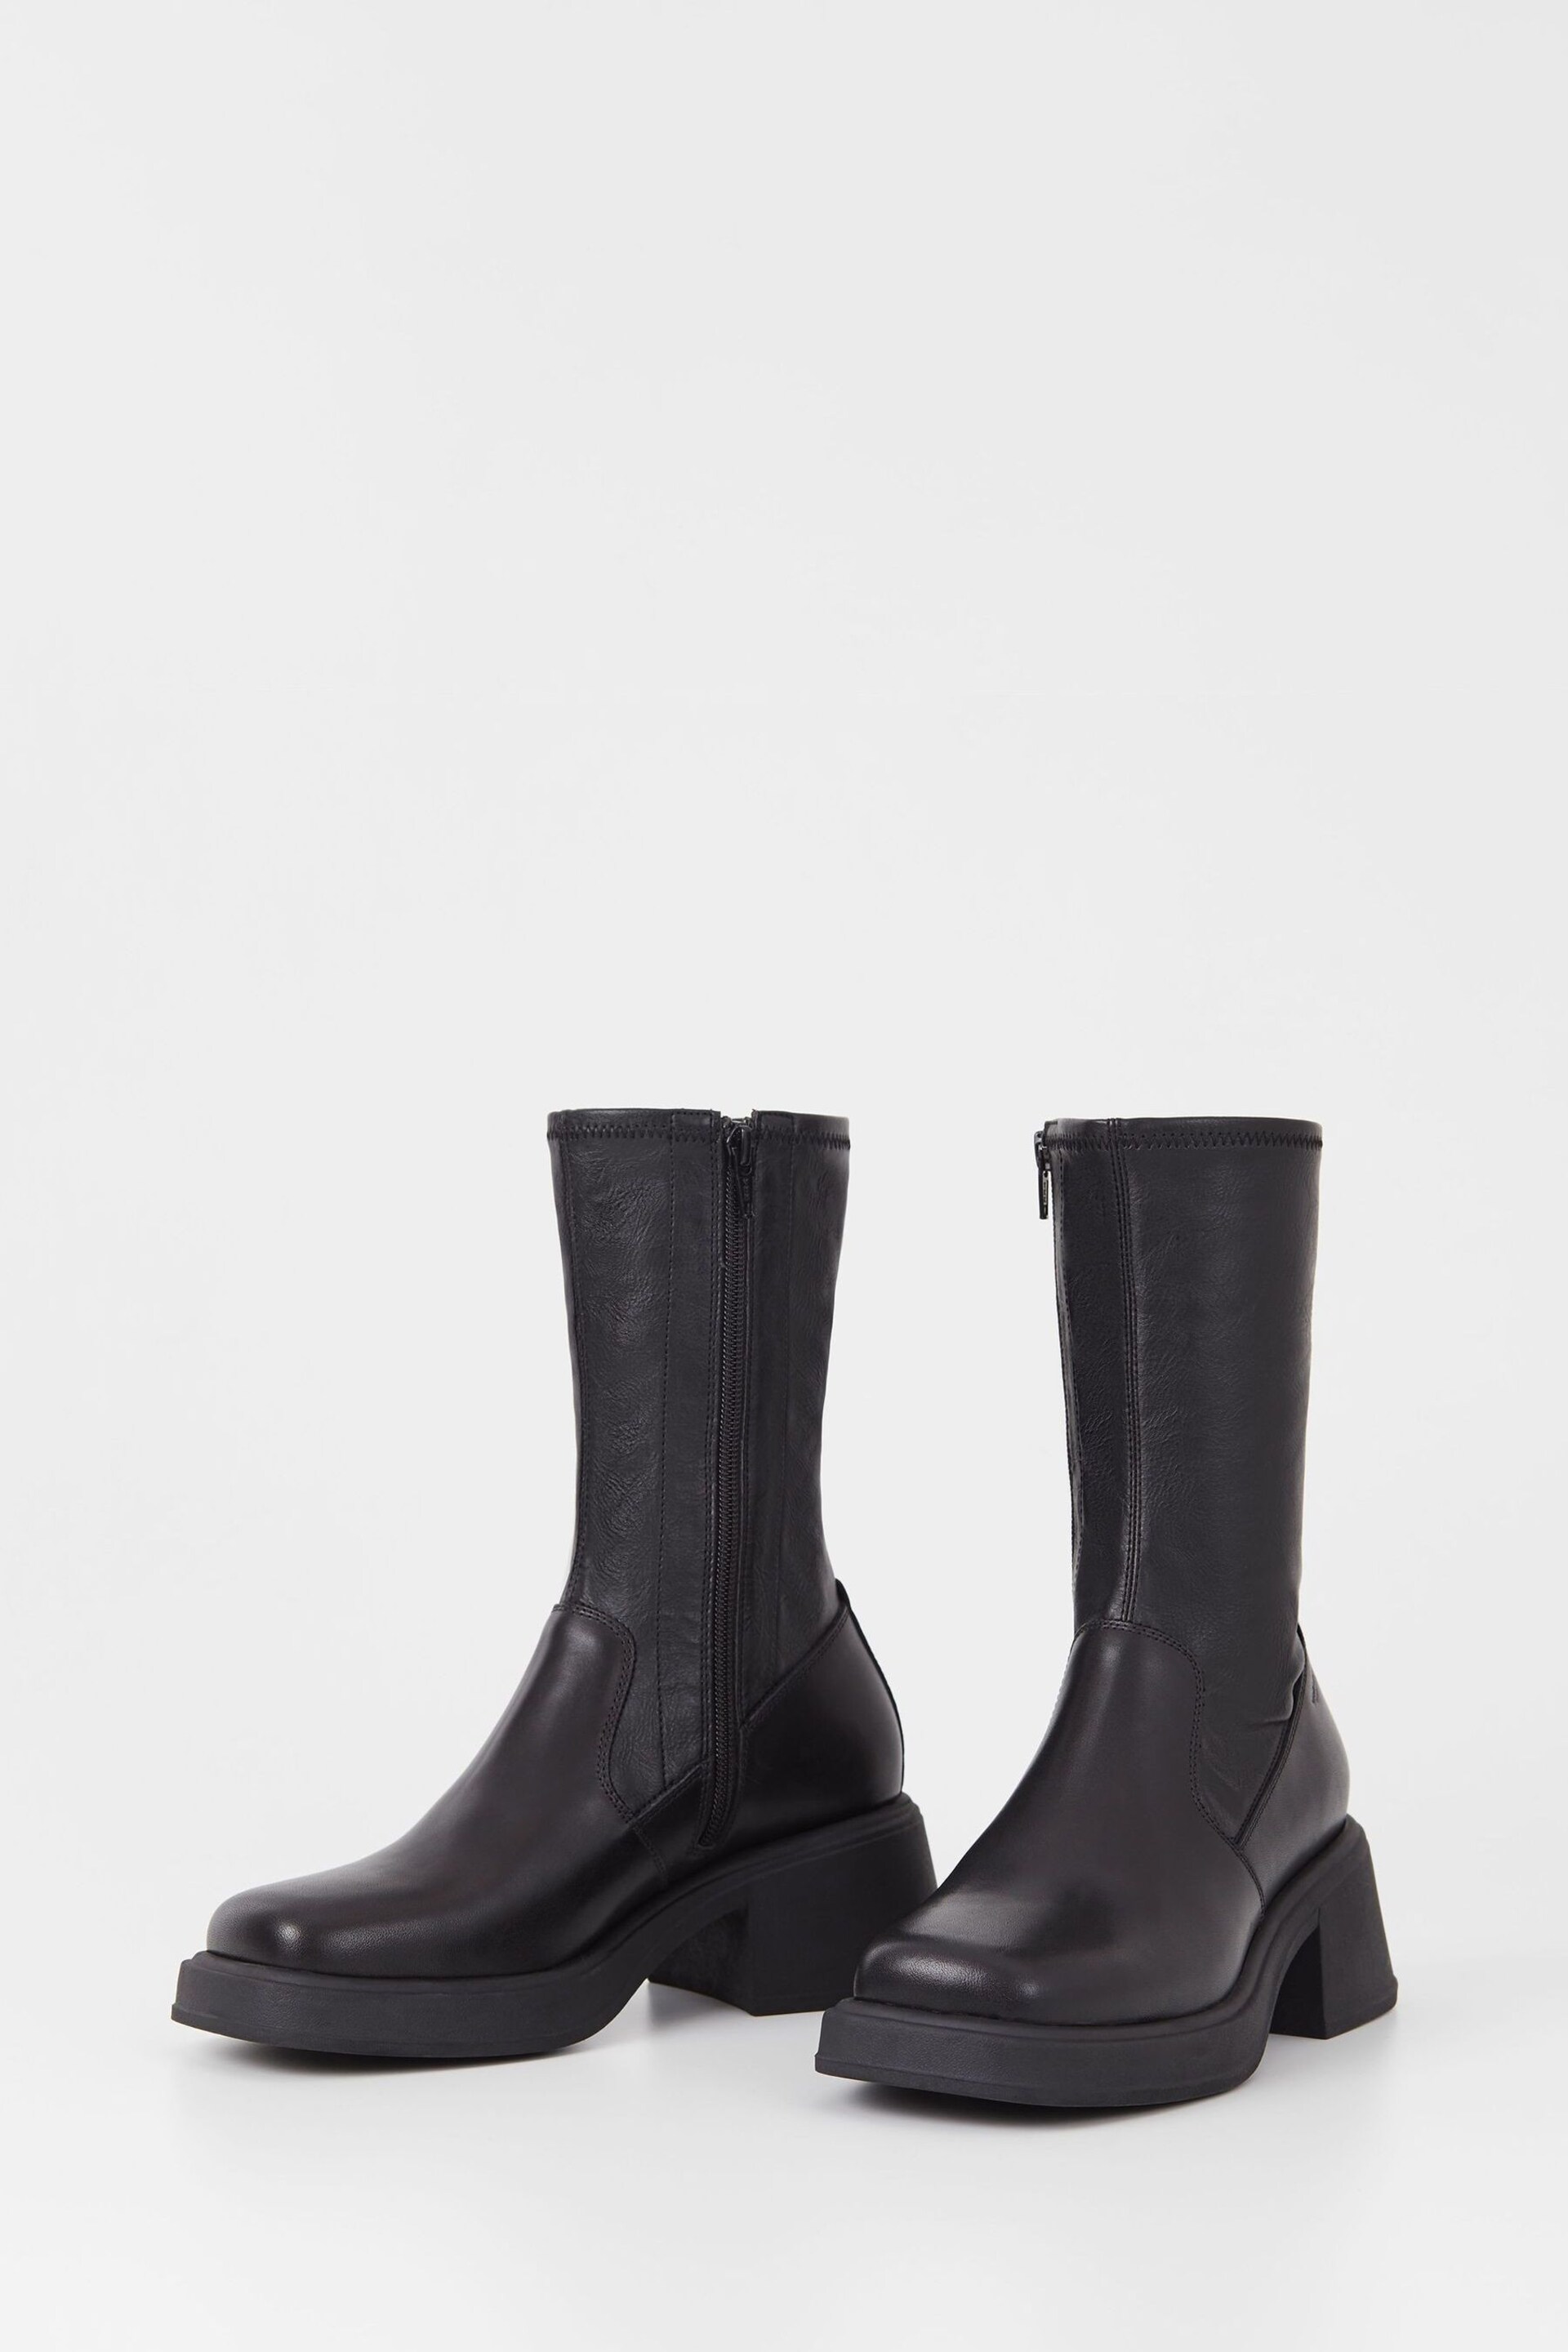 Vagabond Shoemakers Dorah Ankle Stretch Black Boots - Image 2 of 3